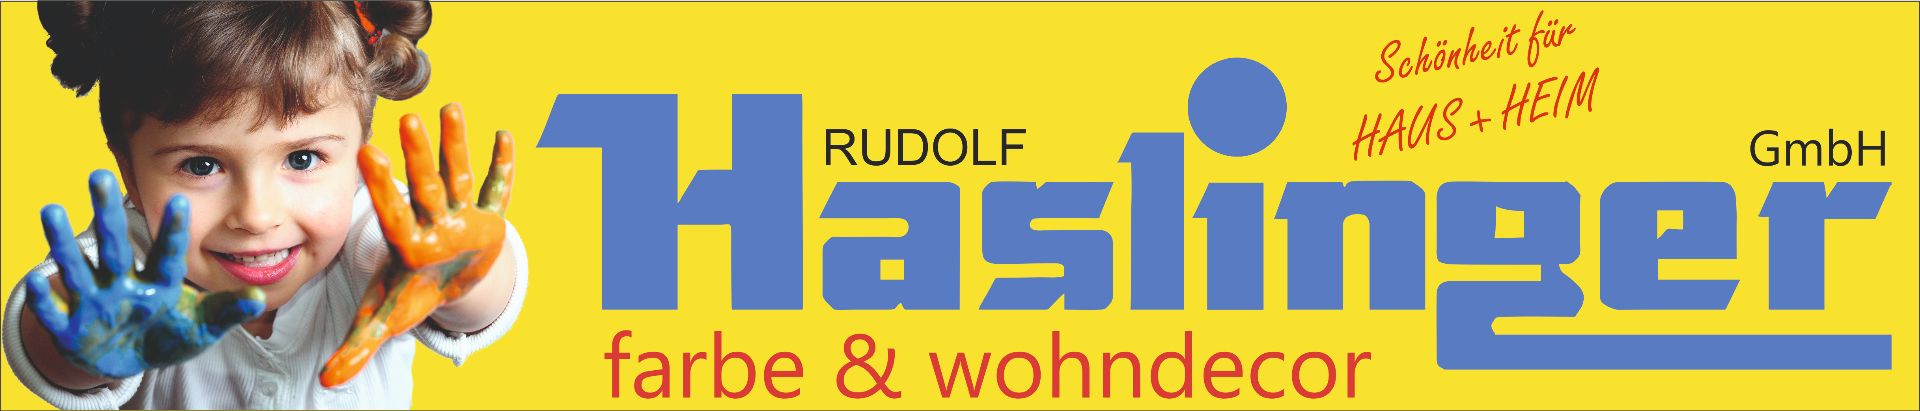 Rudolf Haslinger GmbH